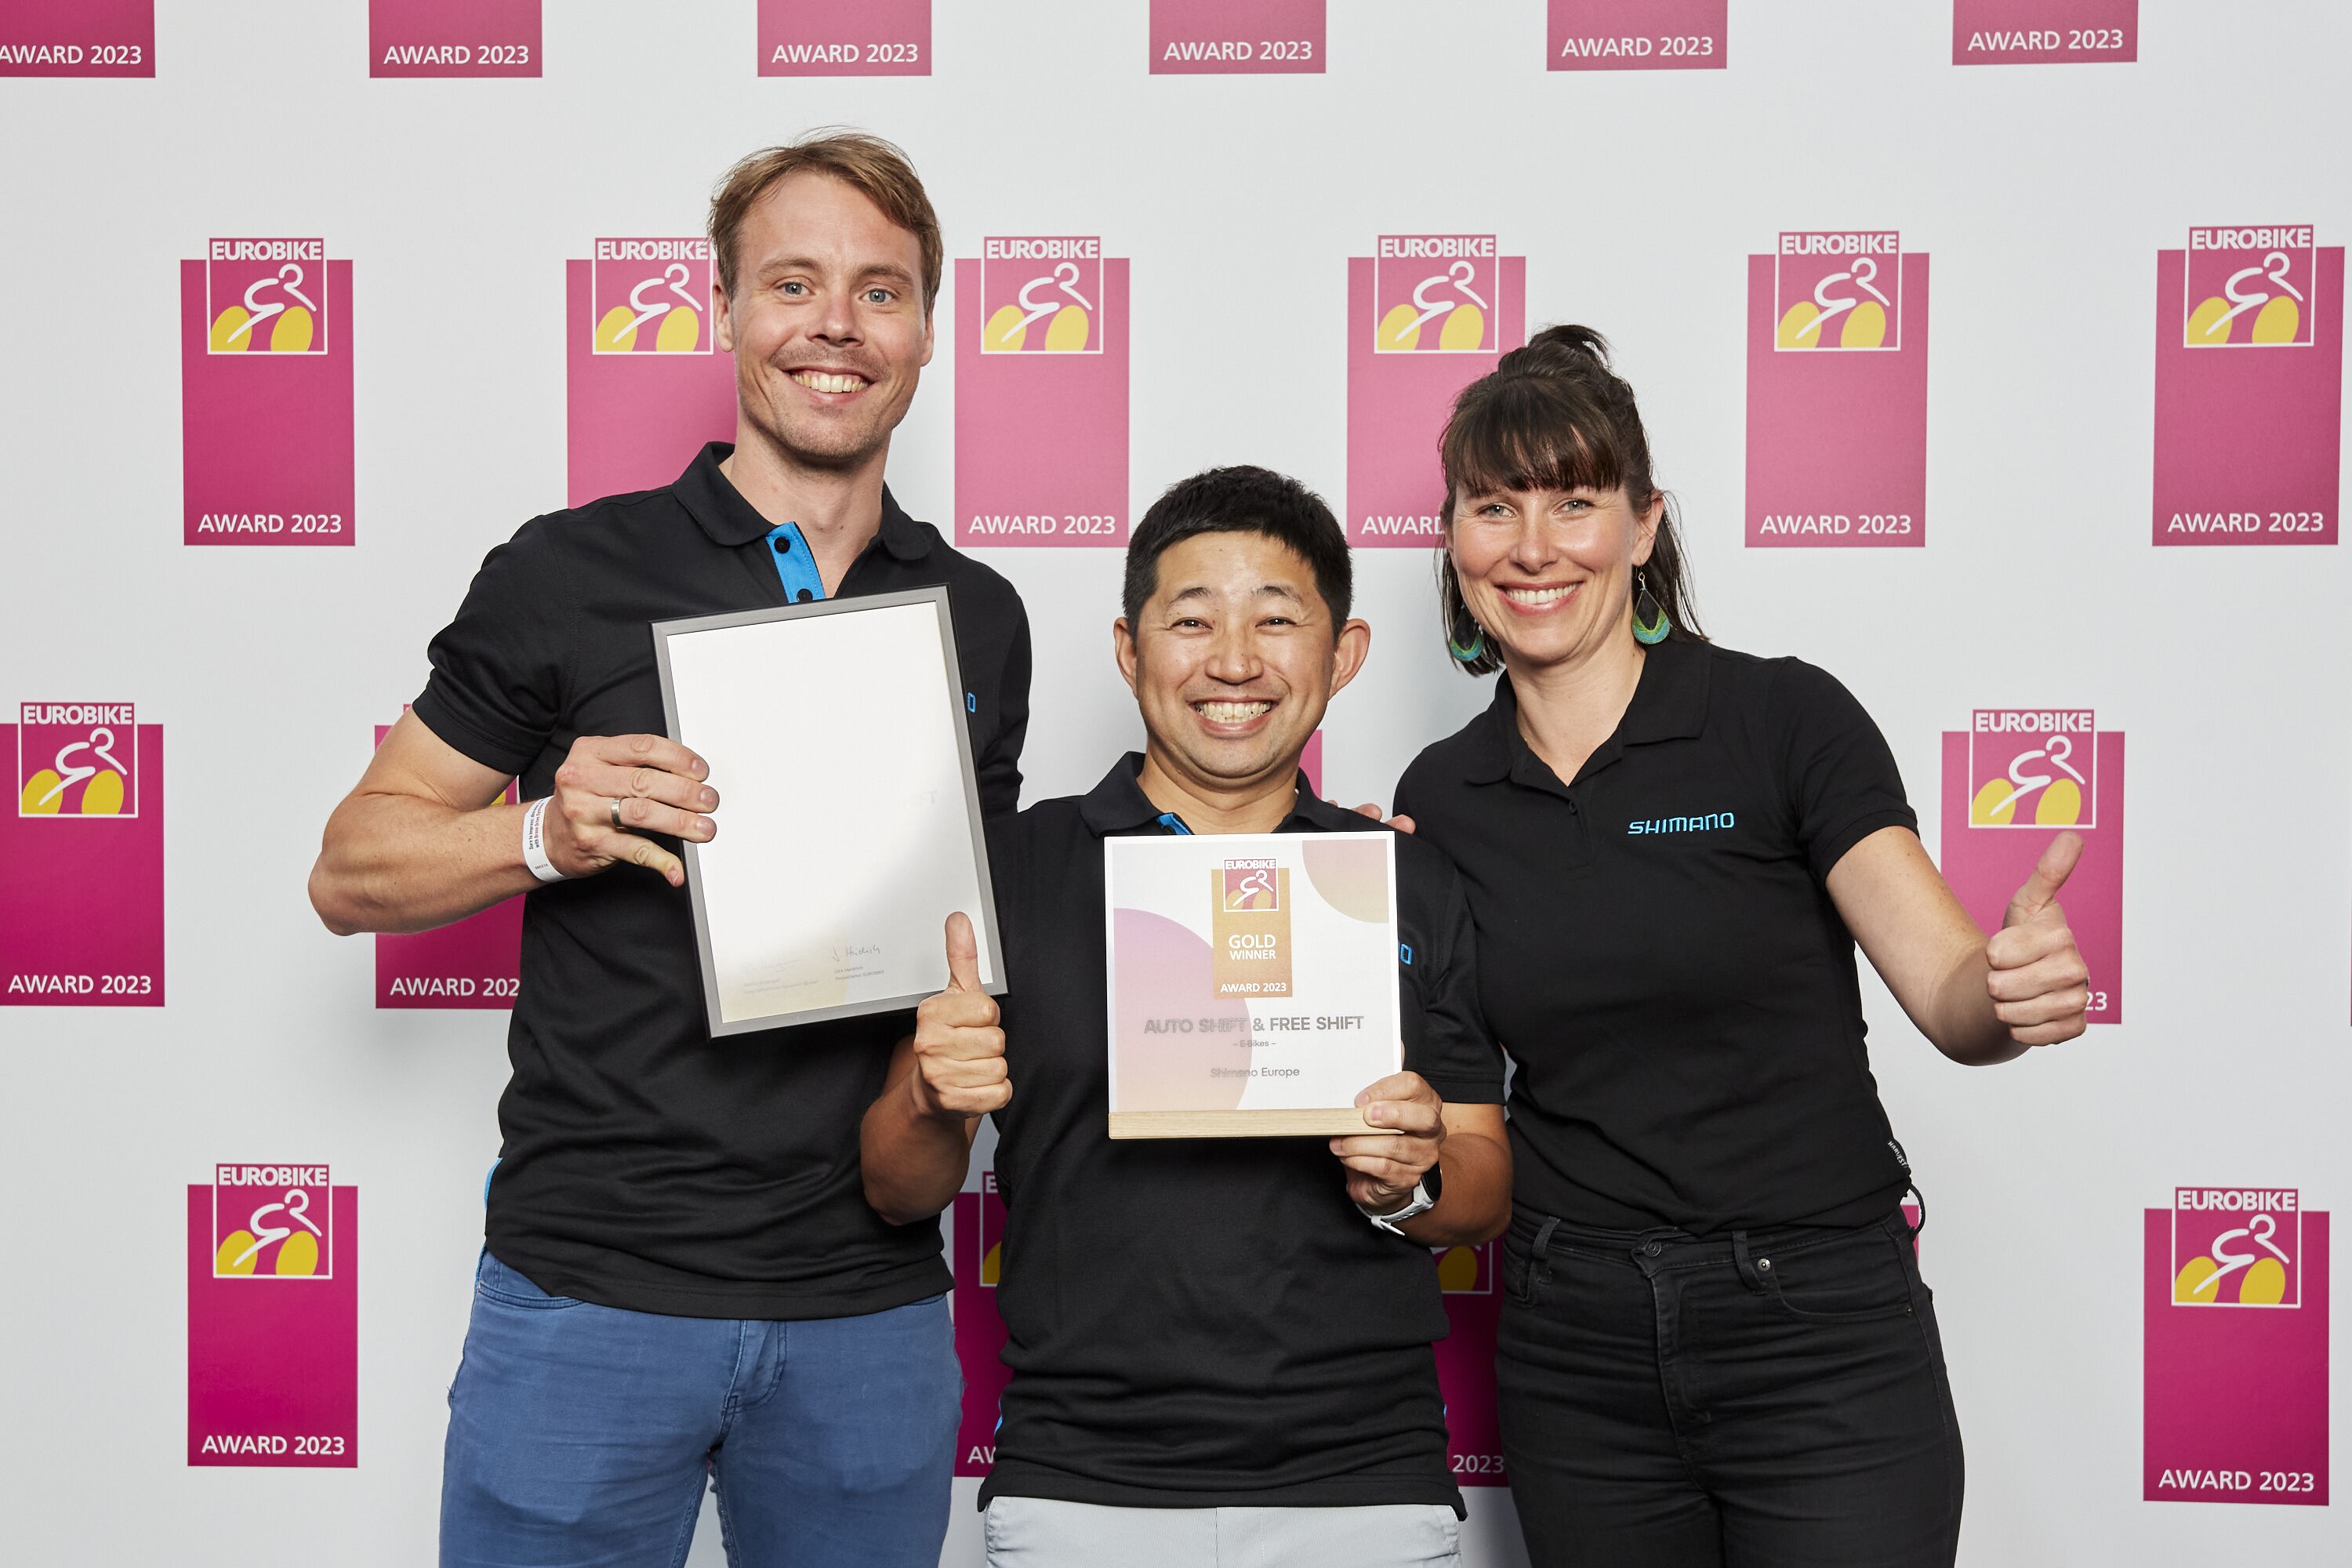 Gewinner Gold Award: Shimano Europe; Auto Shift & Free Shift